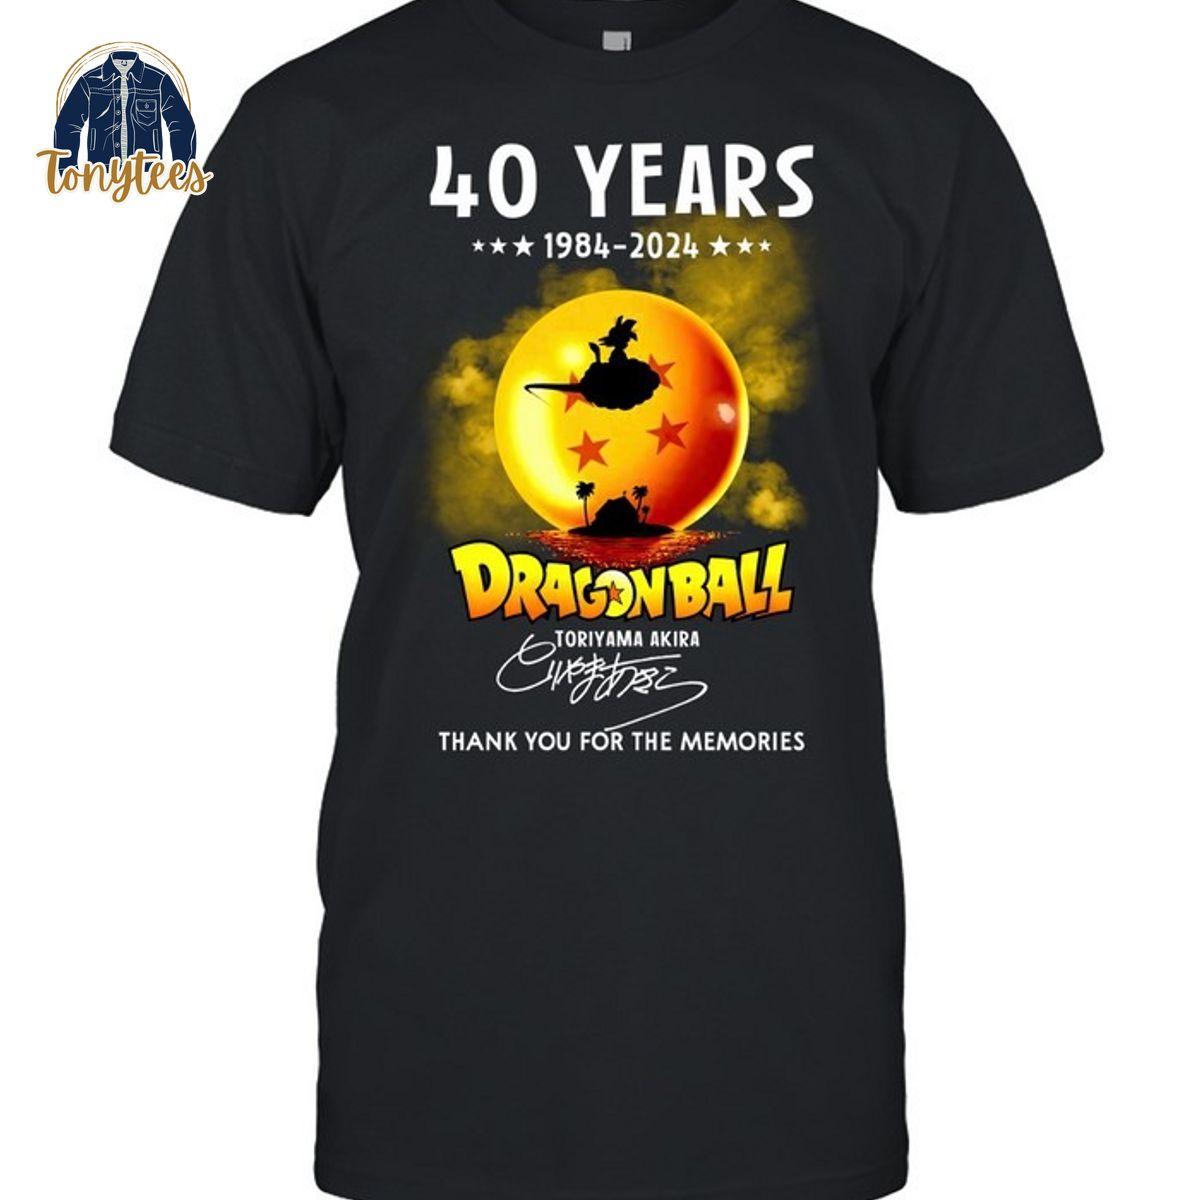 40 years 1984 2024 Dragonball Toriyama Akira Thank you for the memories shirt